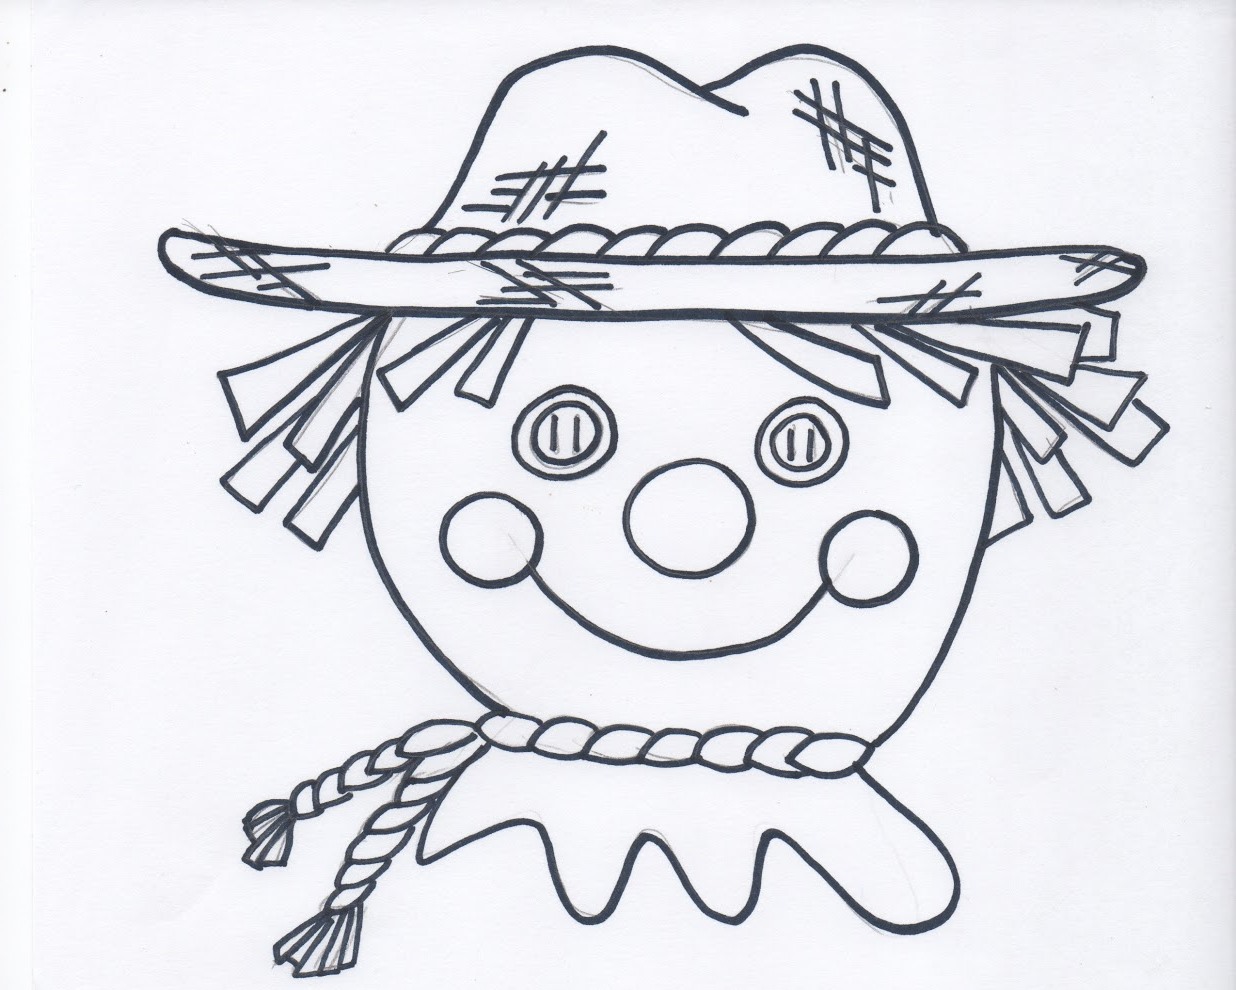 scarecrow black and white clip art